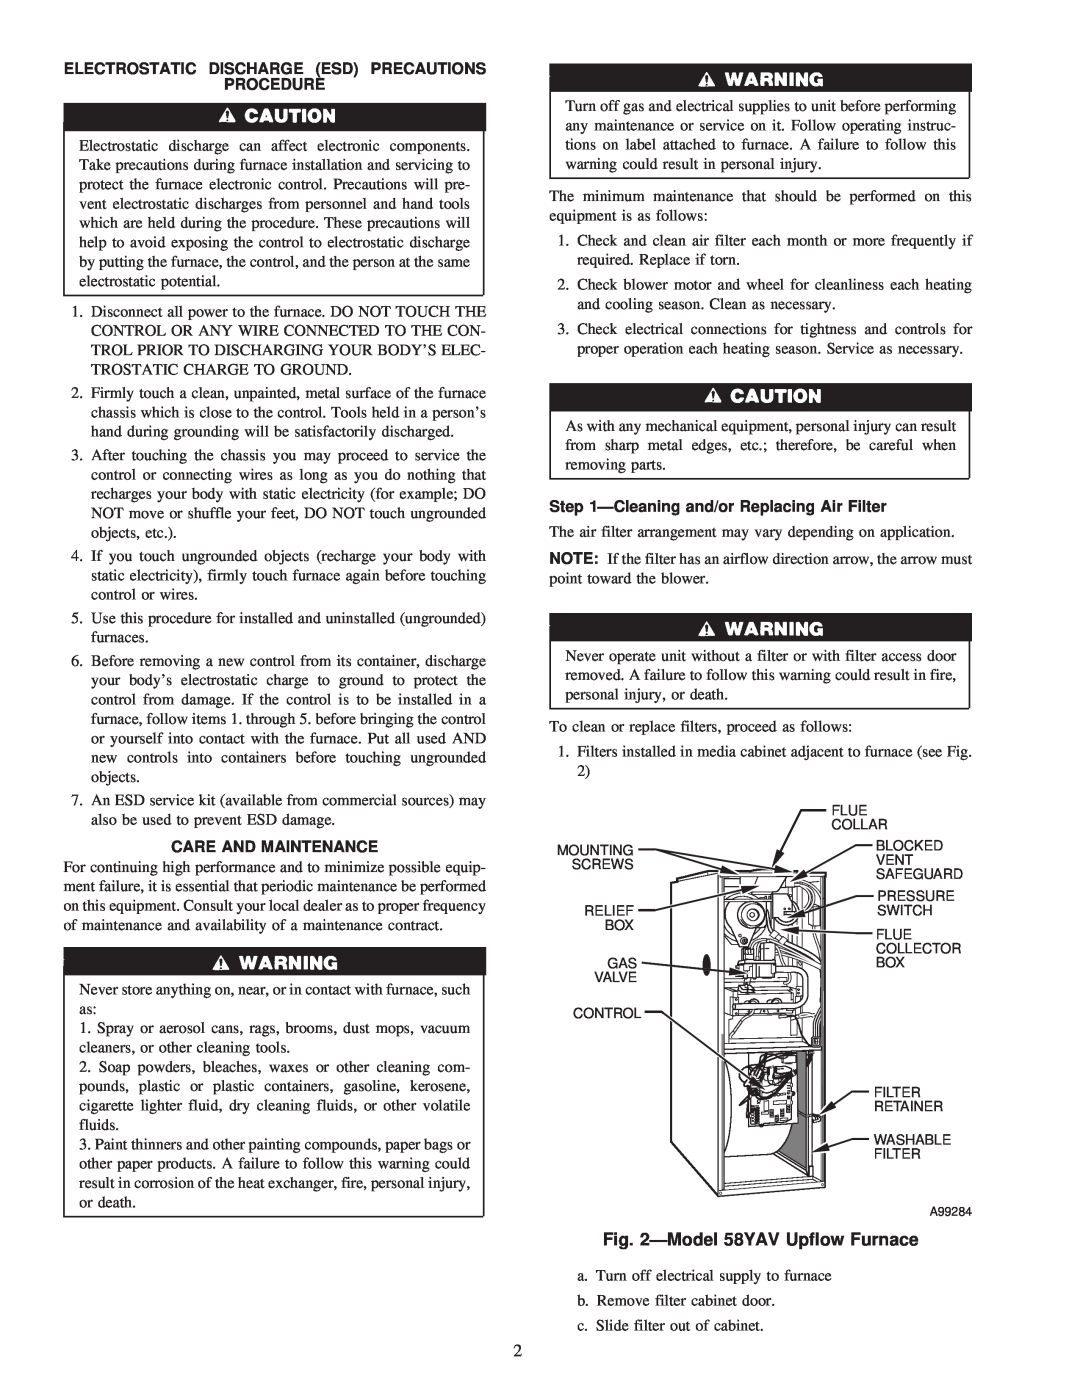 Carrier ÐModel 58YAV Upflow Furnace, Electrostatic Discharge Esd Precautions Procedure, Care And Maintenance 